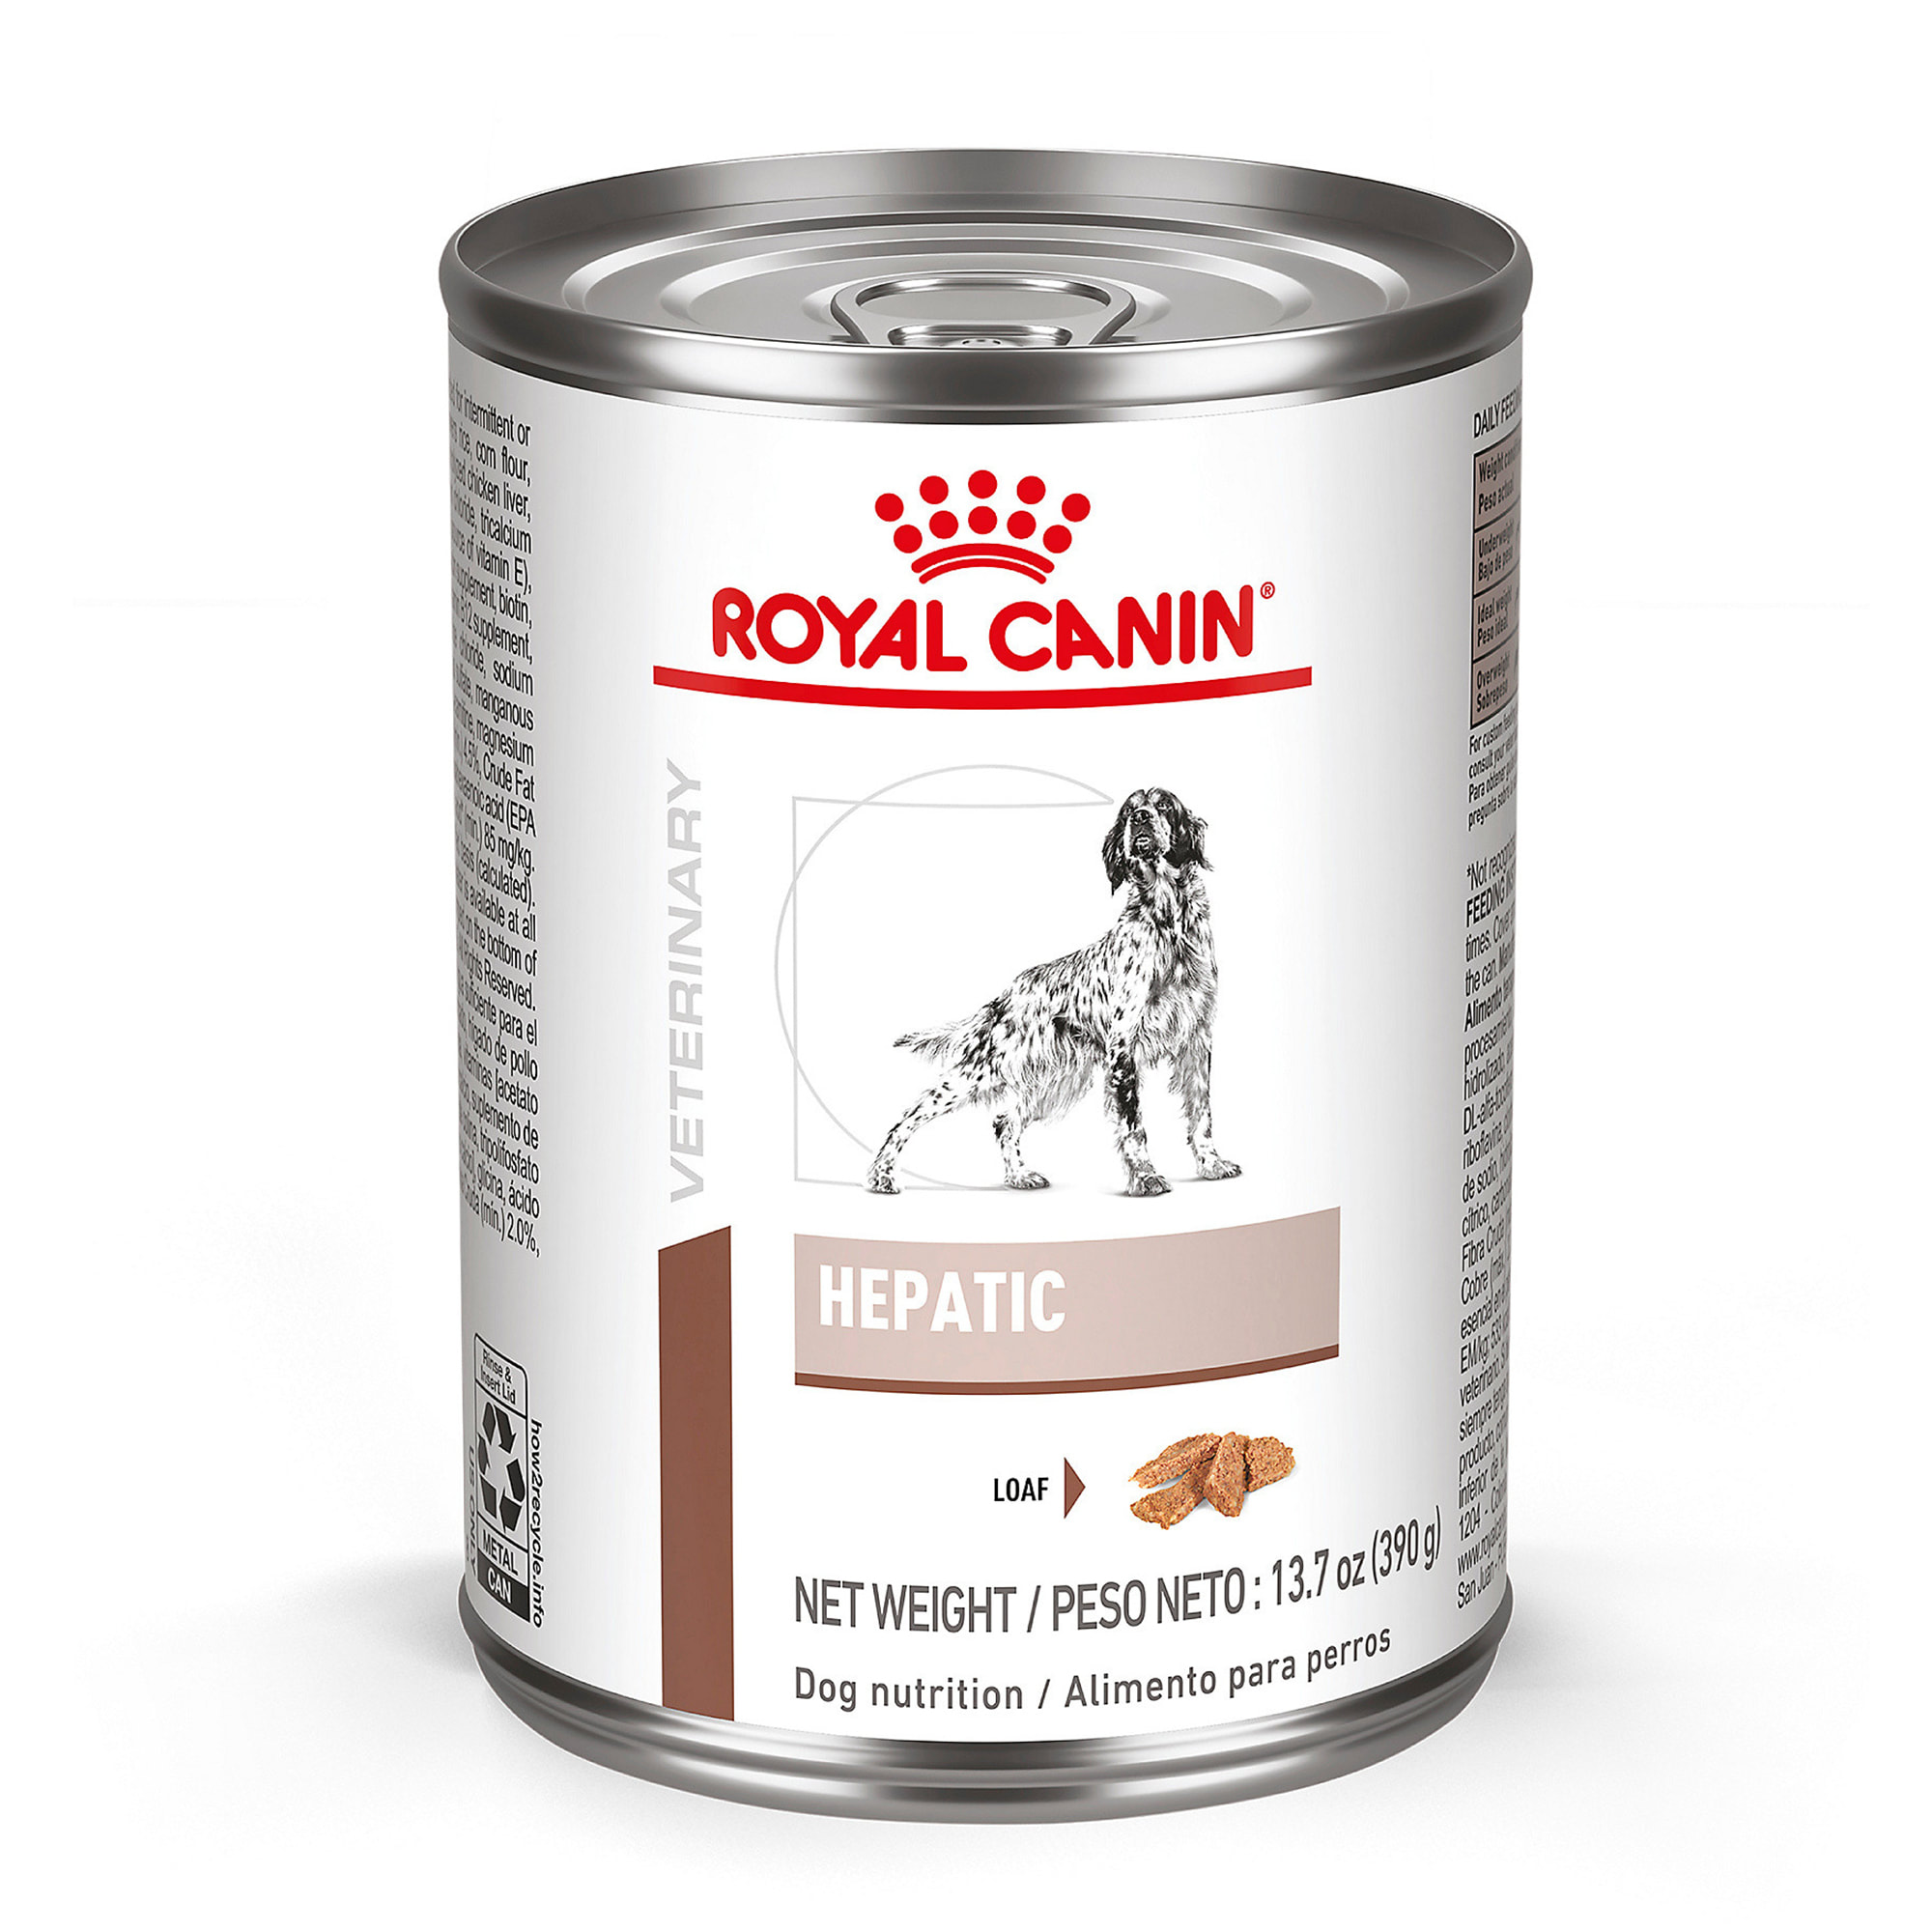 riboflavin in dog food